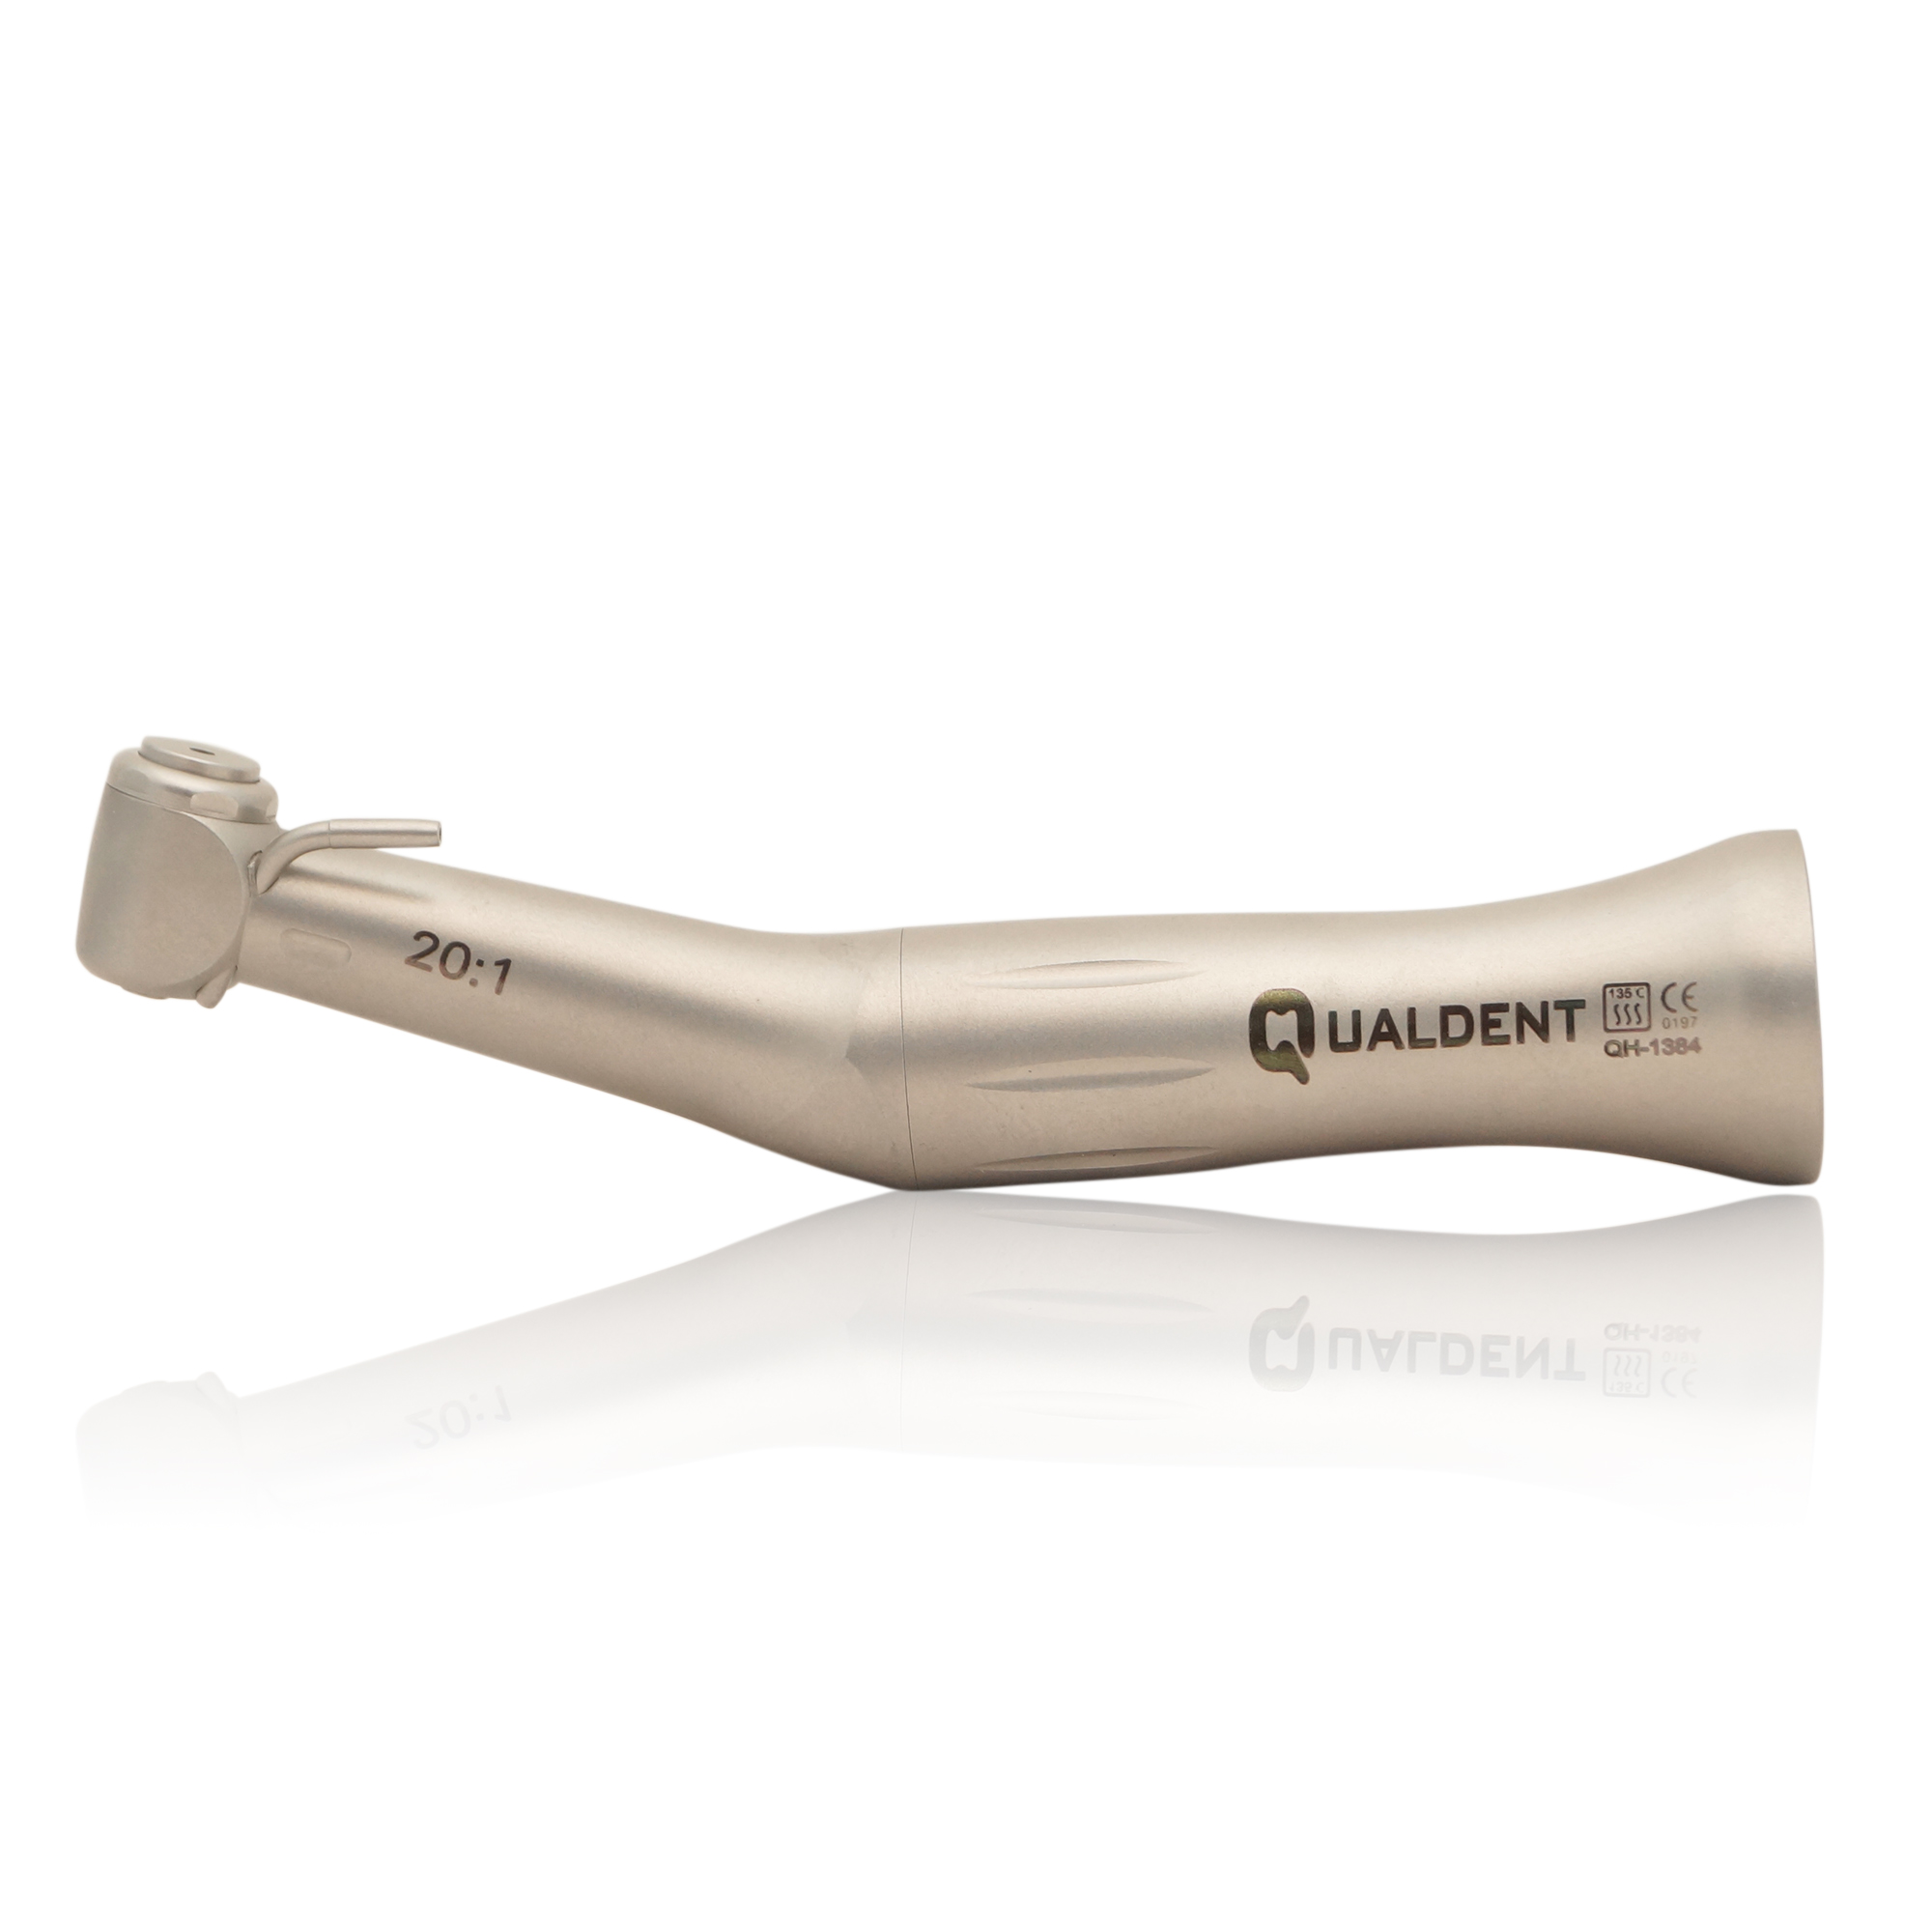 Qualdent Dental Implant Handpiece 20:1 - Dentalstall India